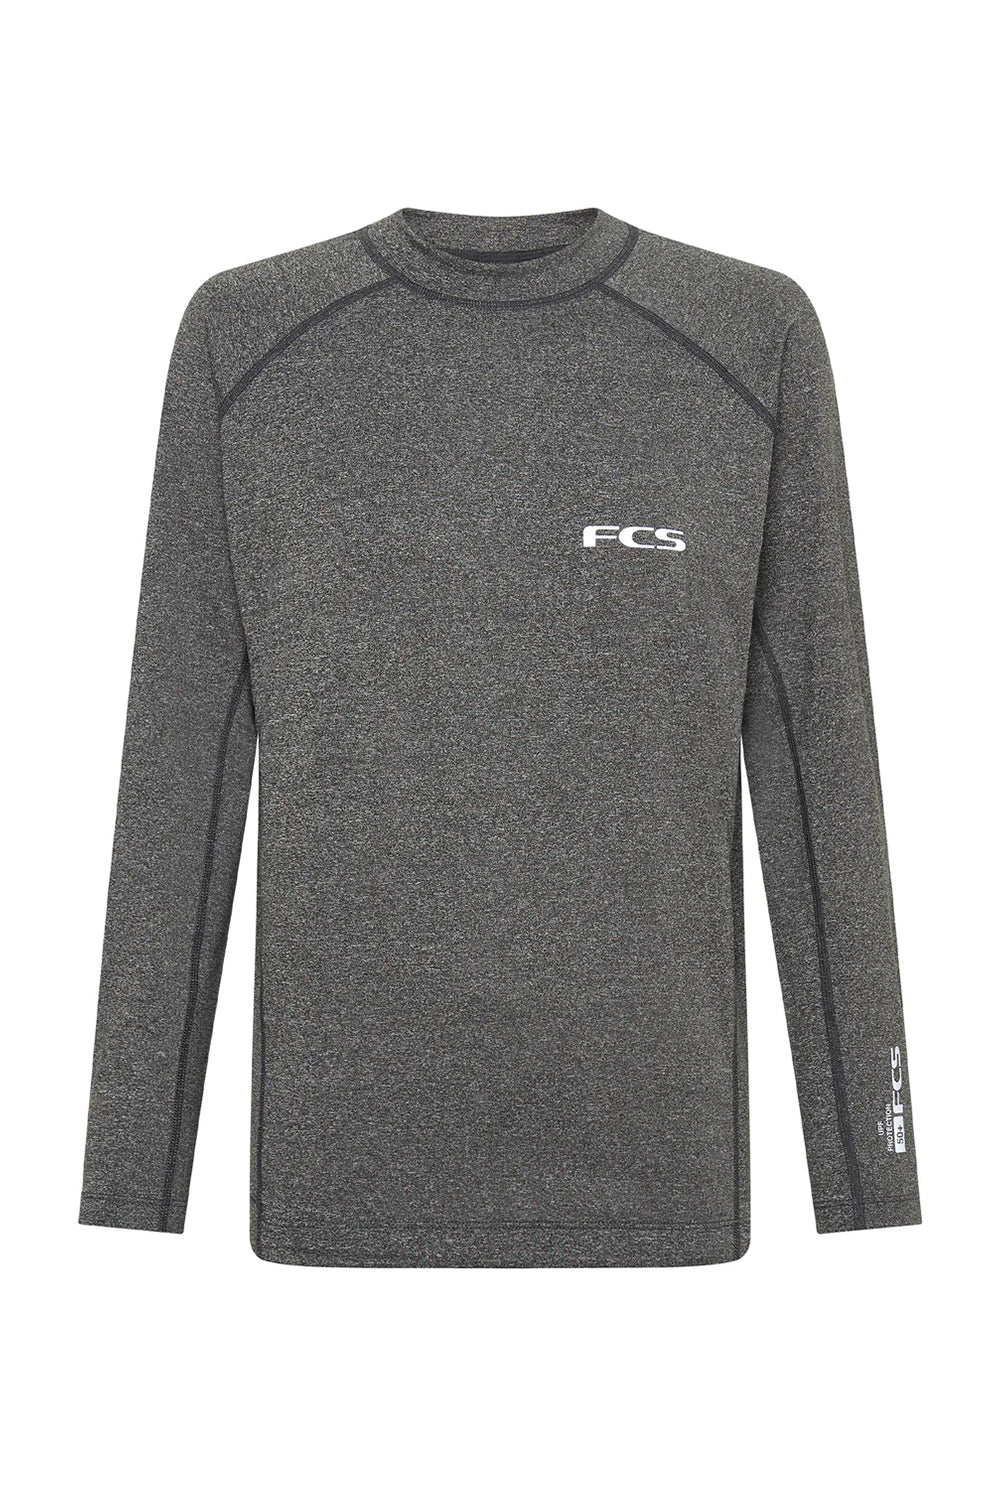 FCS Mens Essential Long Sleeve Rash Vest